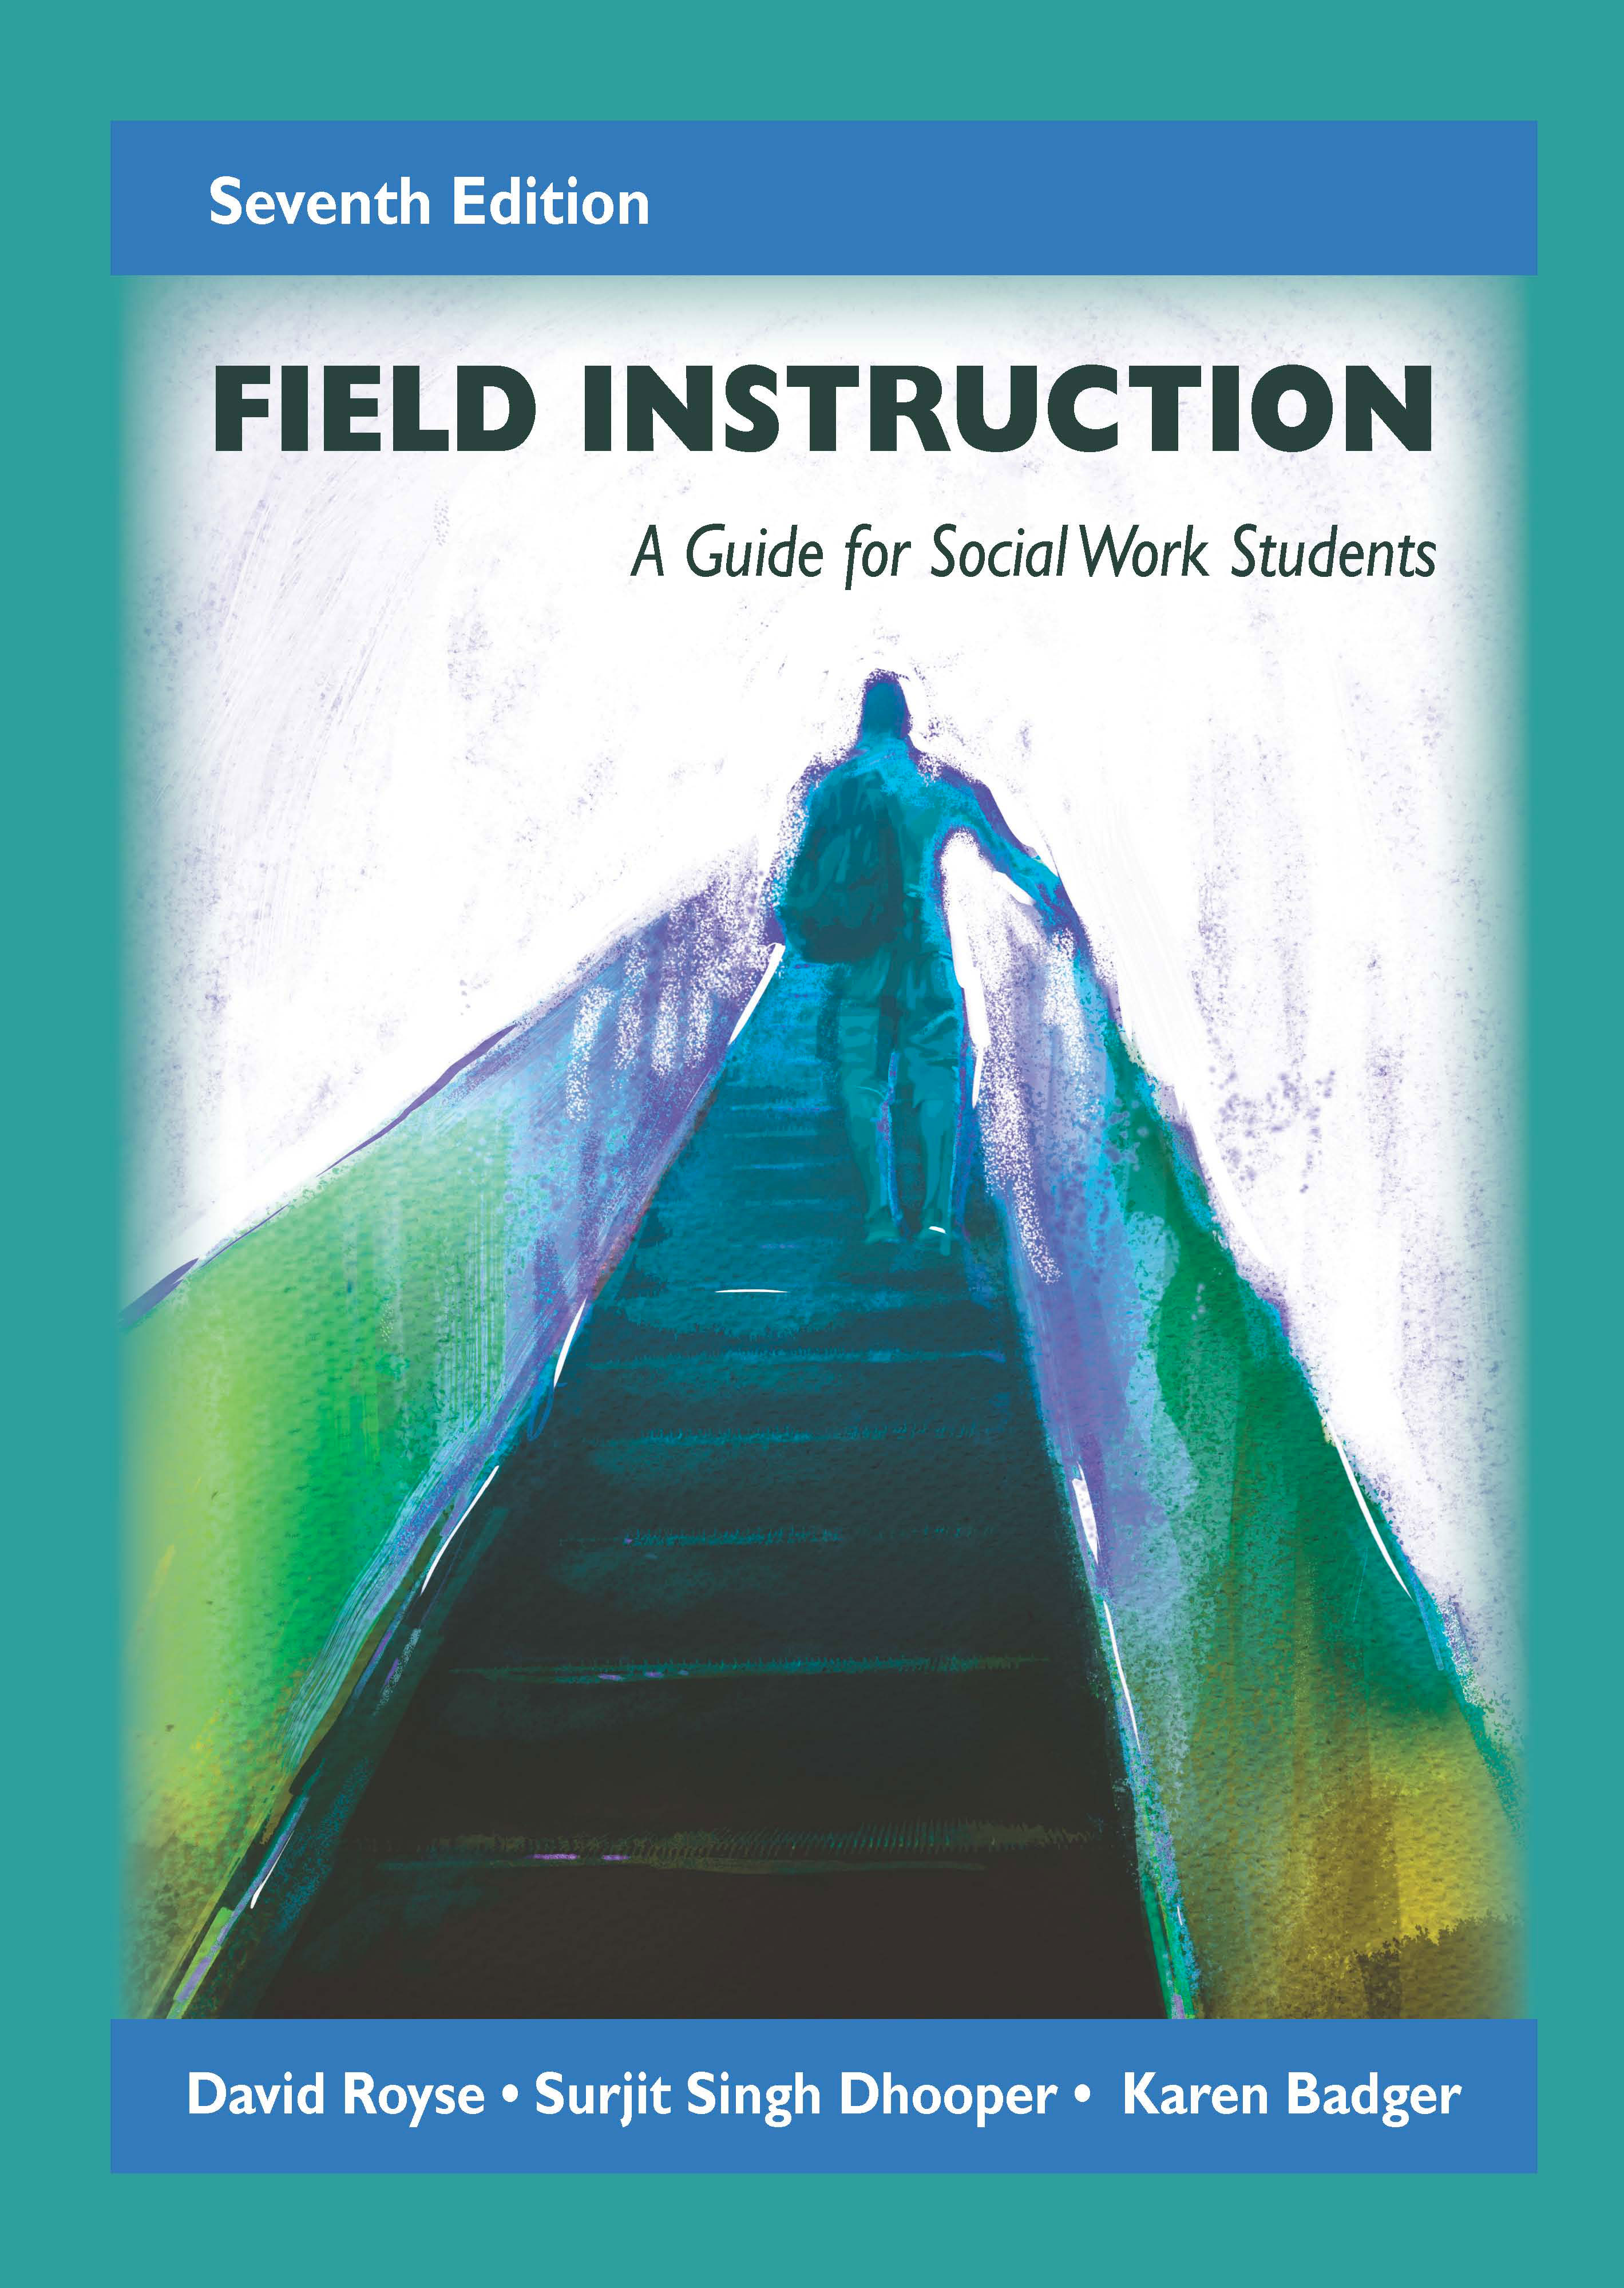 Field Instruction: A Guide for Social Work Students by David  Royse, Surjit Singh Dhooper, Karen  Badger